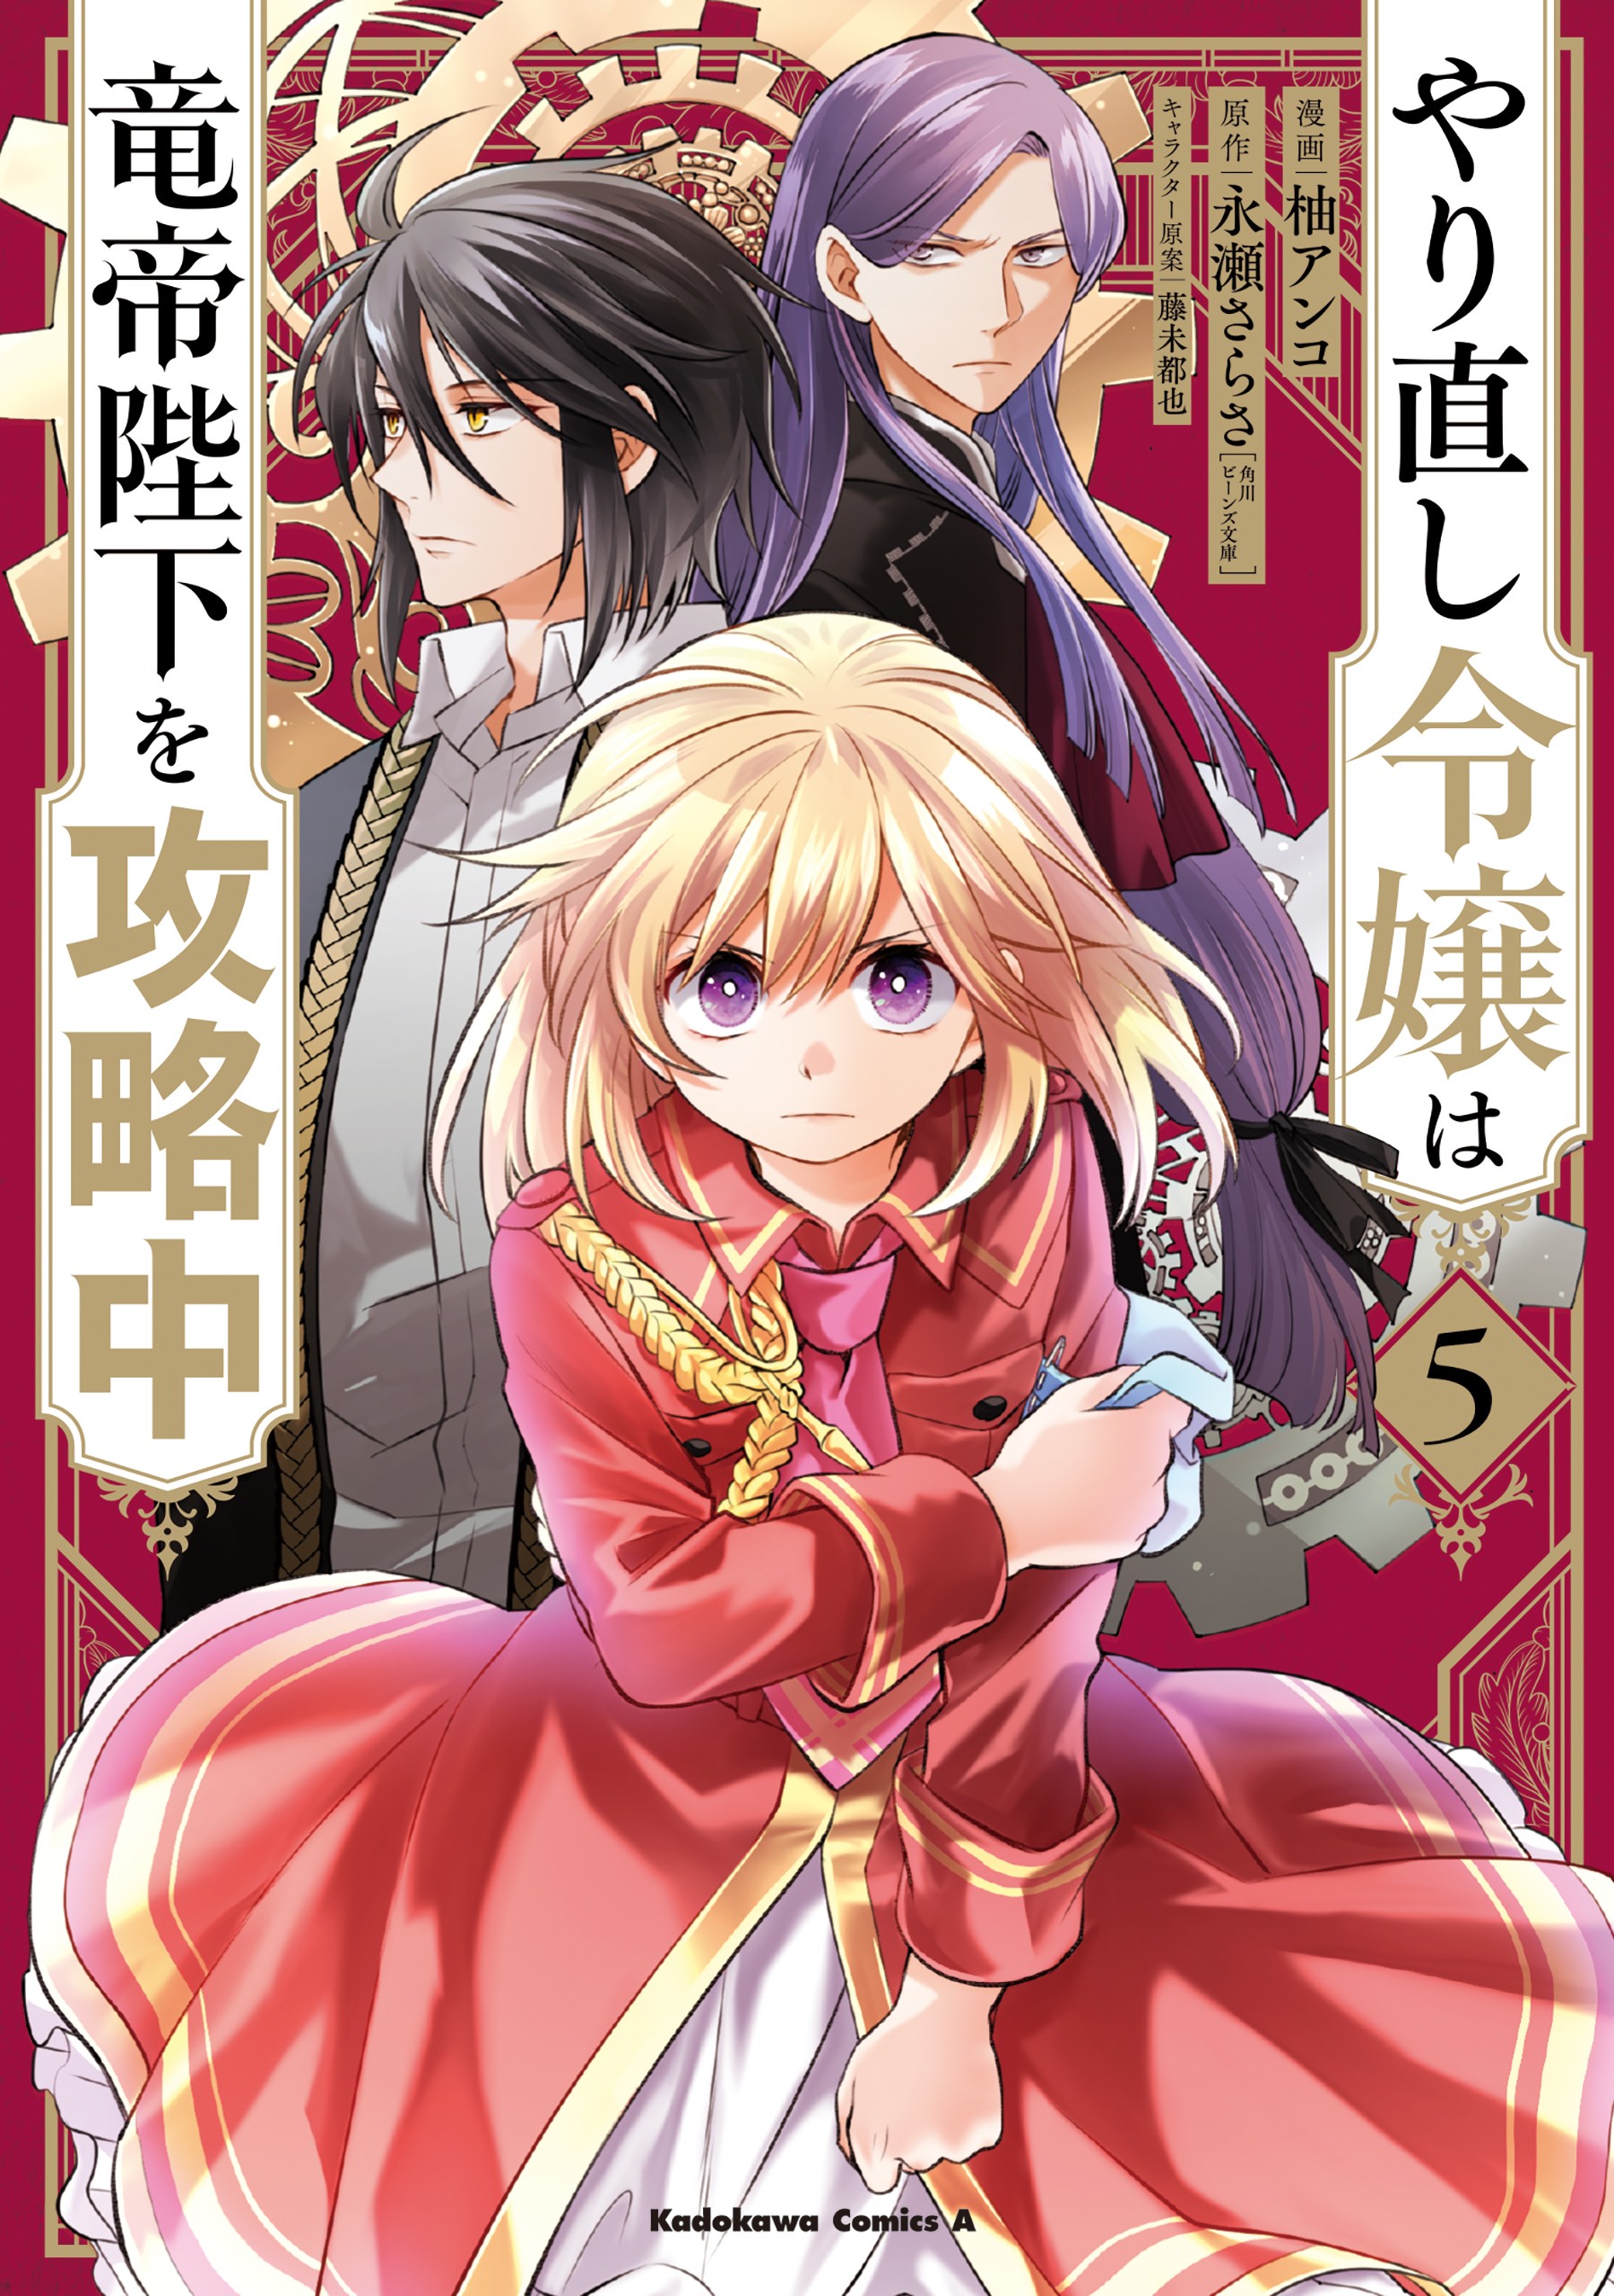 Read Dragon Raja 2 Manga on Mangakakalot